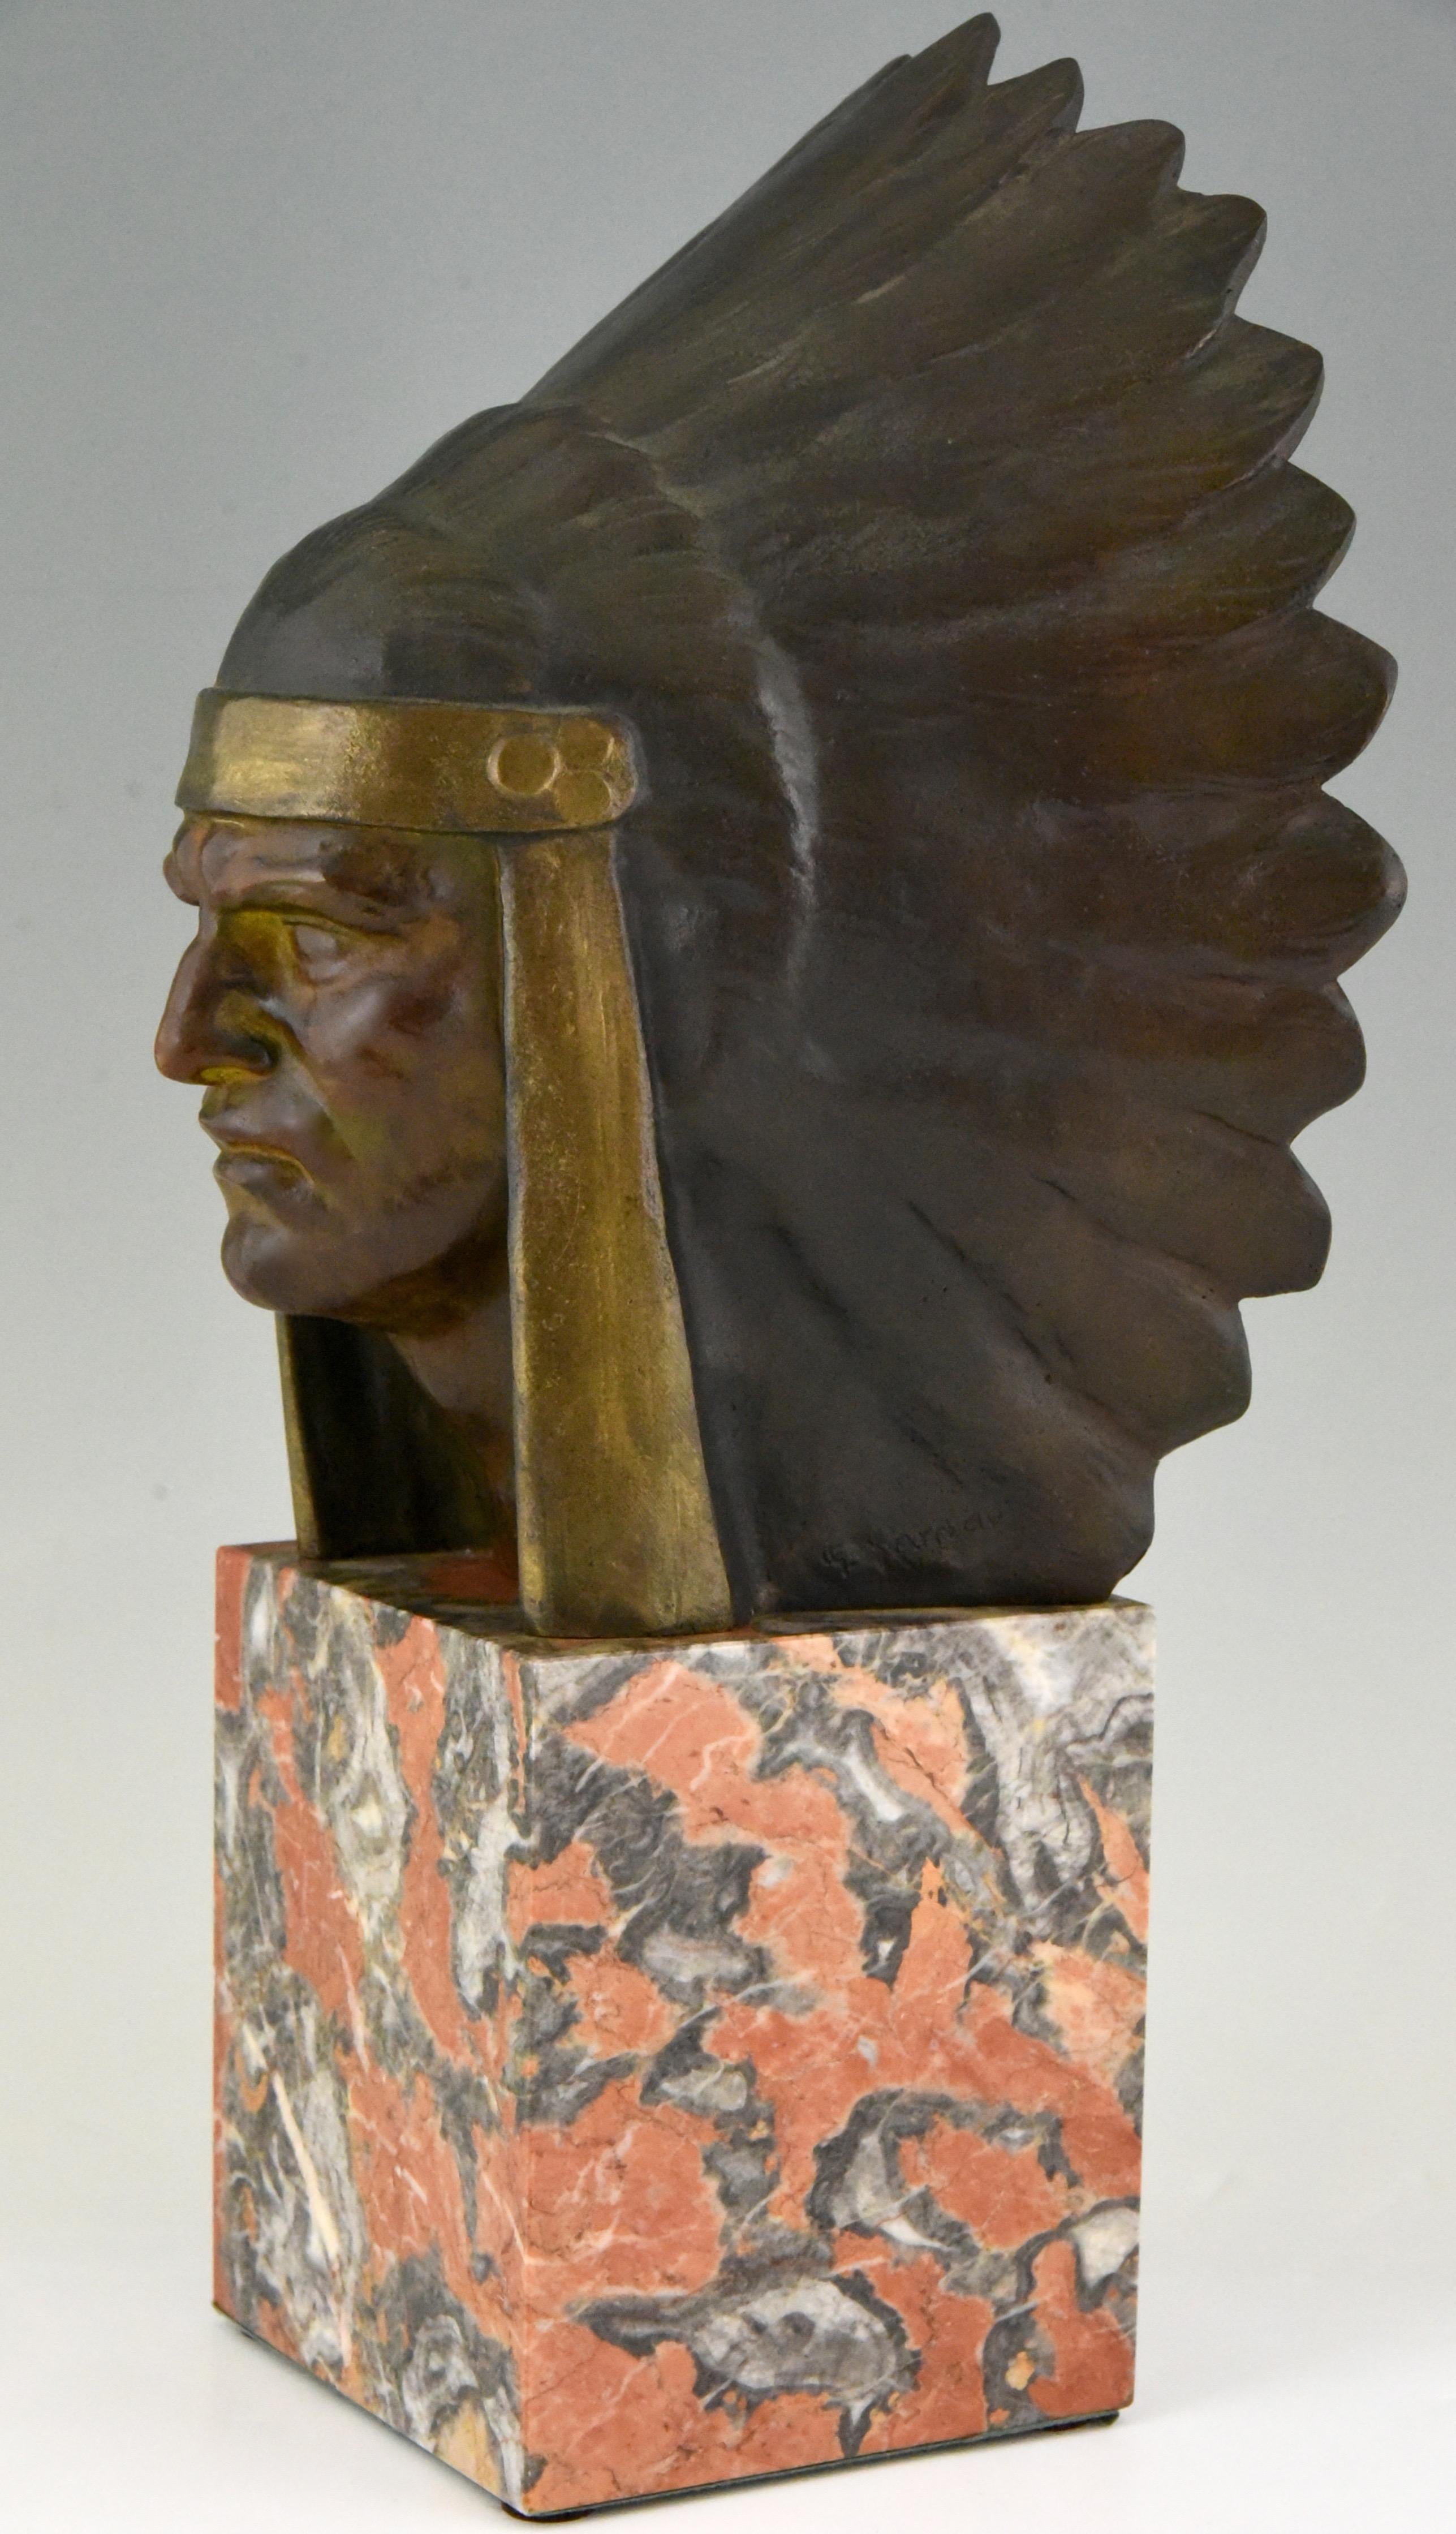 Patinated Art Deco Bronze Sculpture of an Indian with Headdress Georges Garreau, 1930